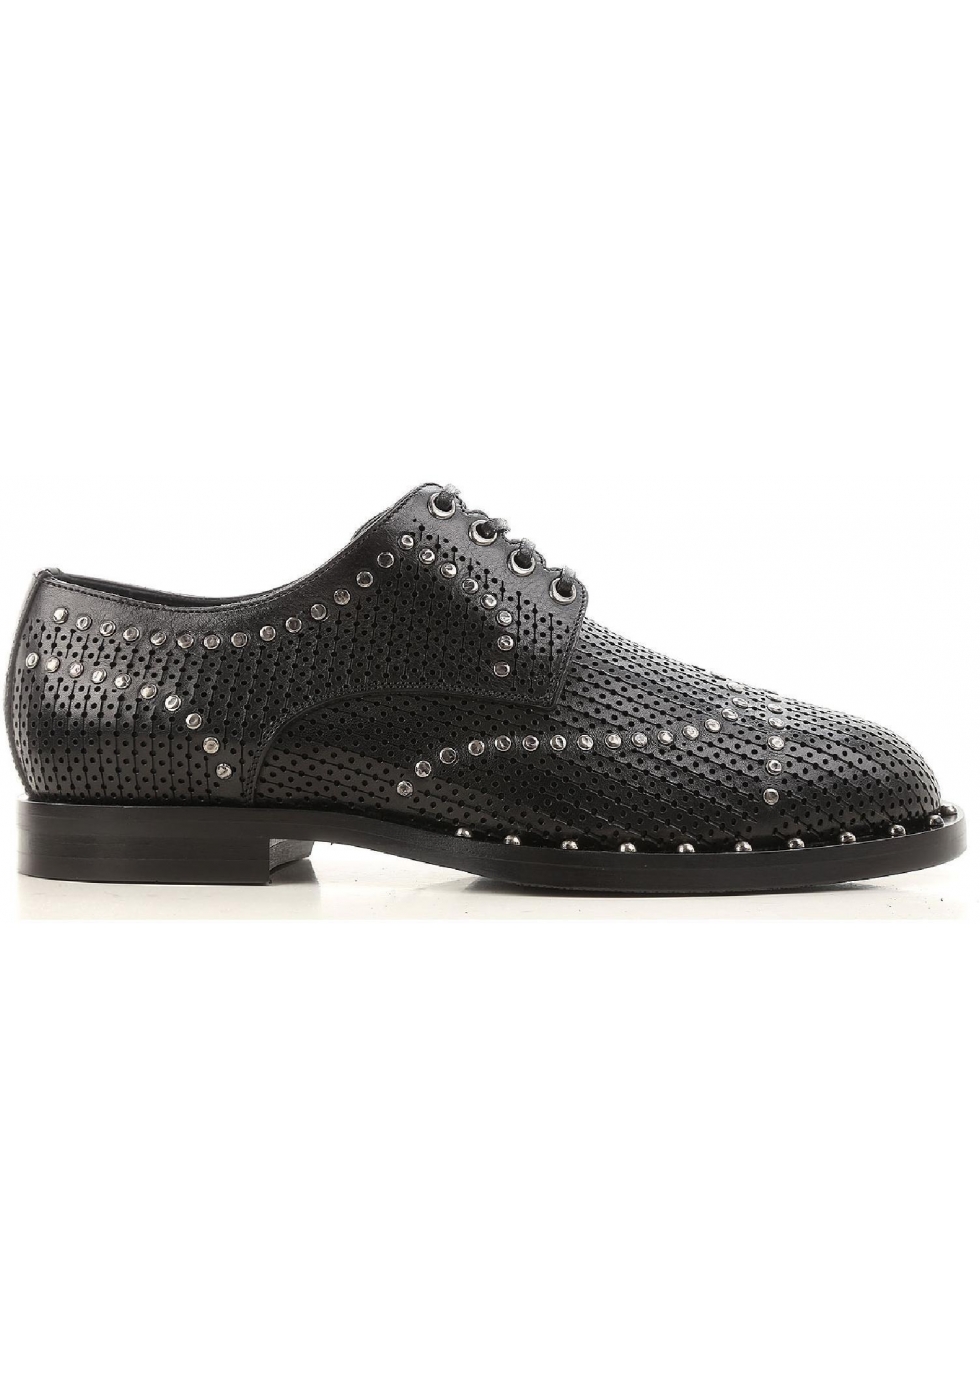 Dolce&Gabbana men's laser cut lace-up in black leather - Italian Boutique